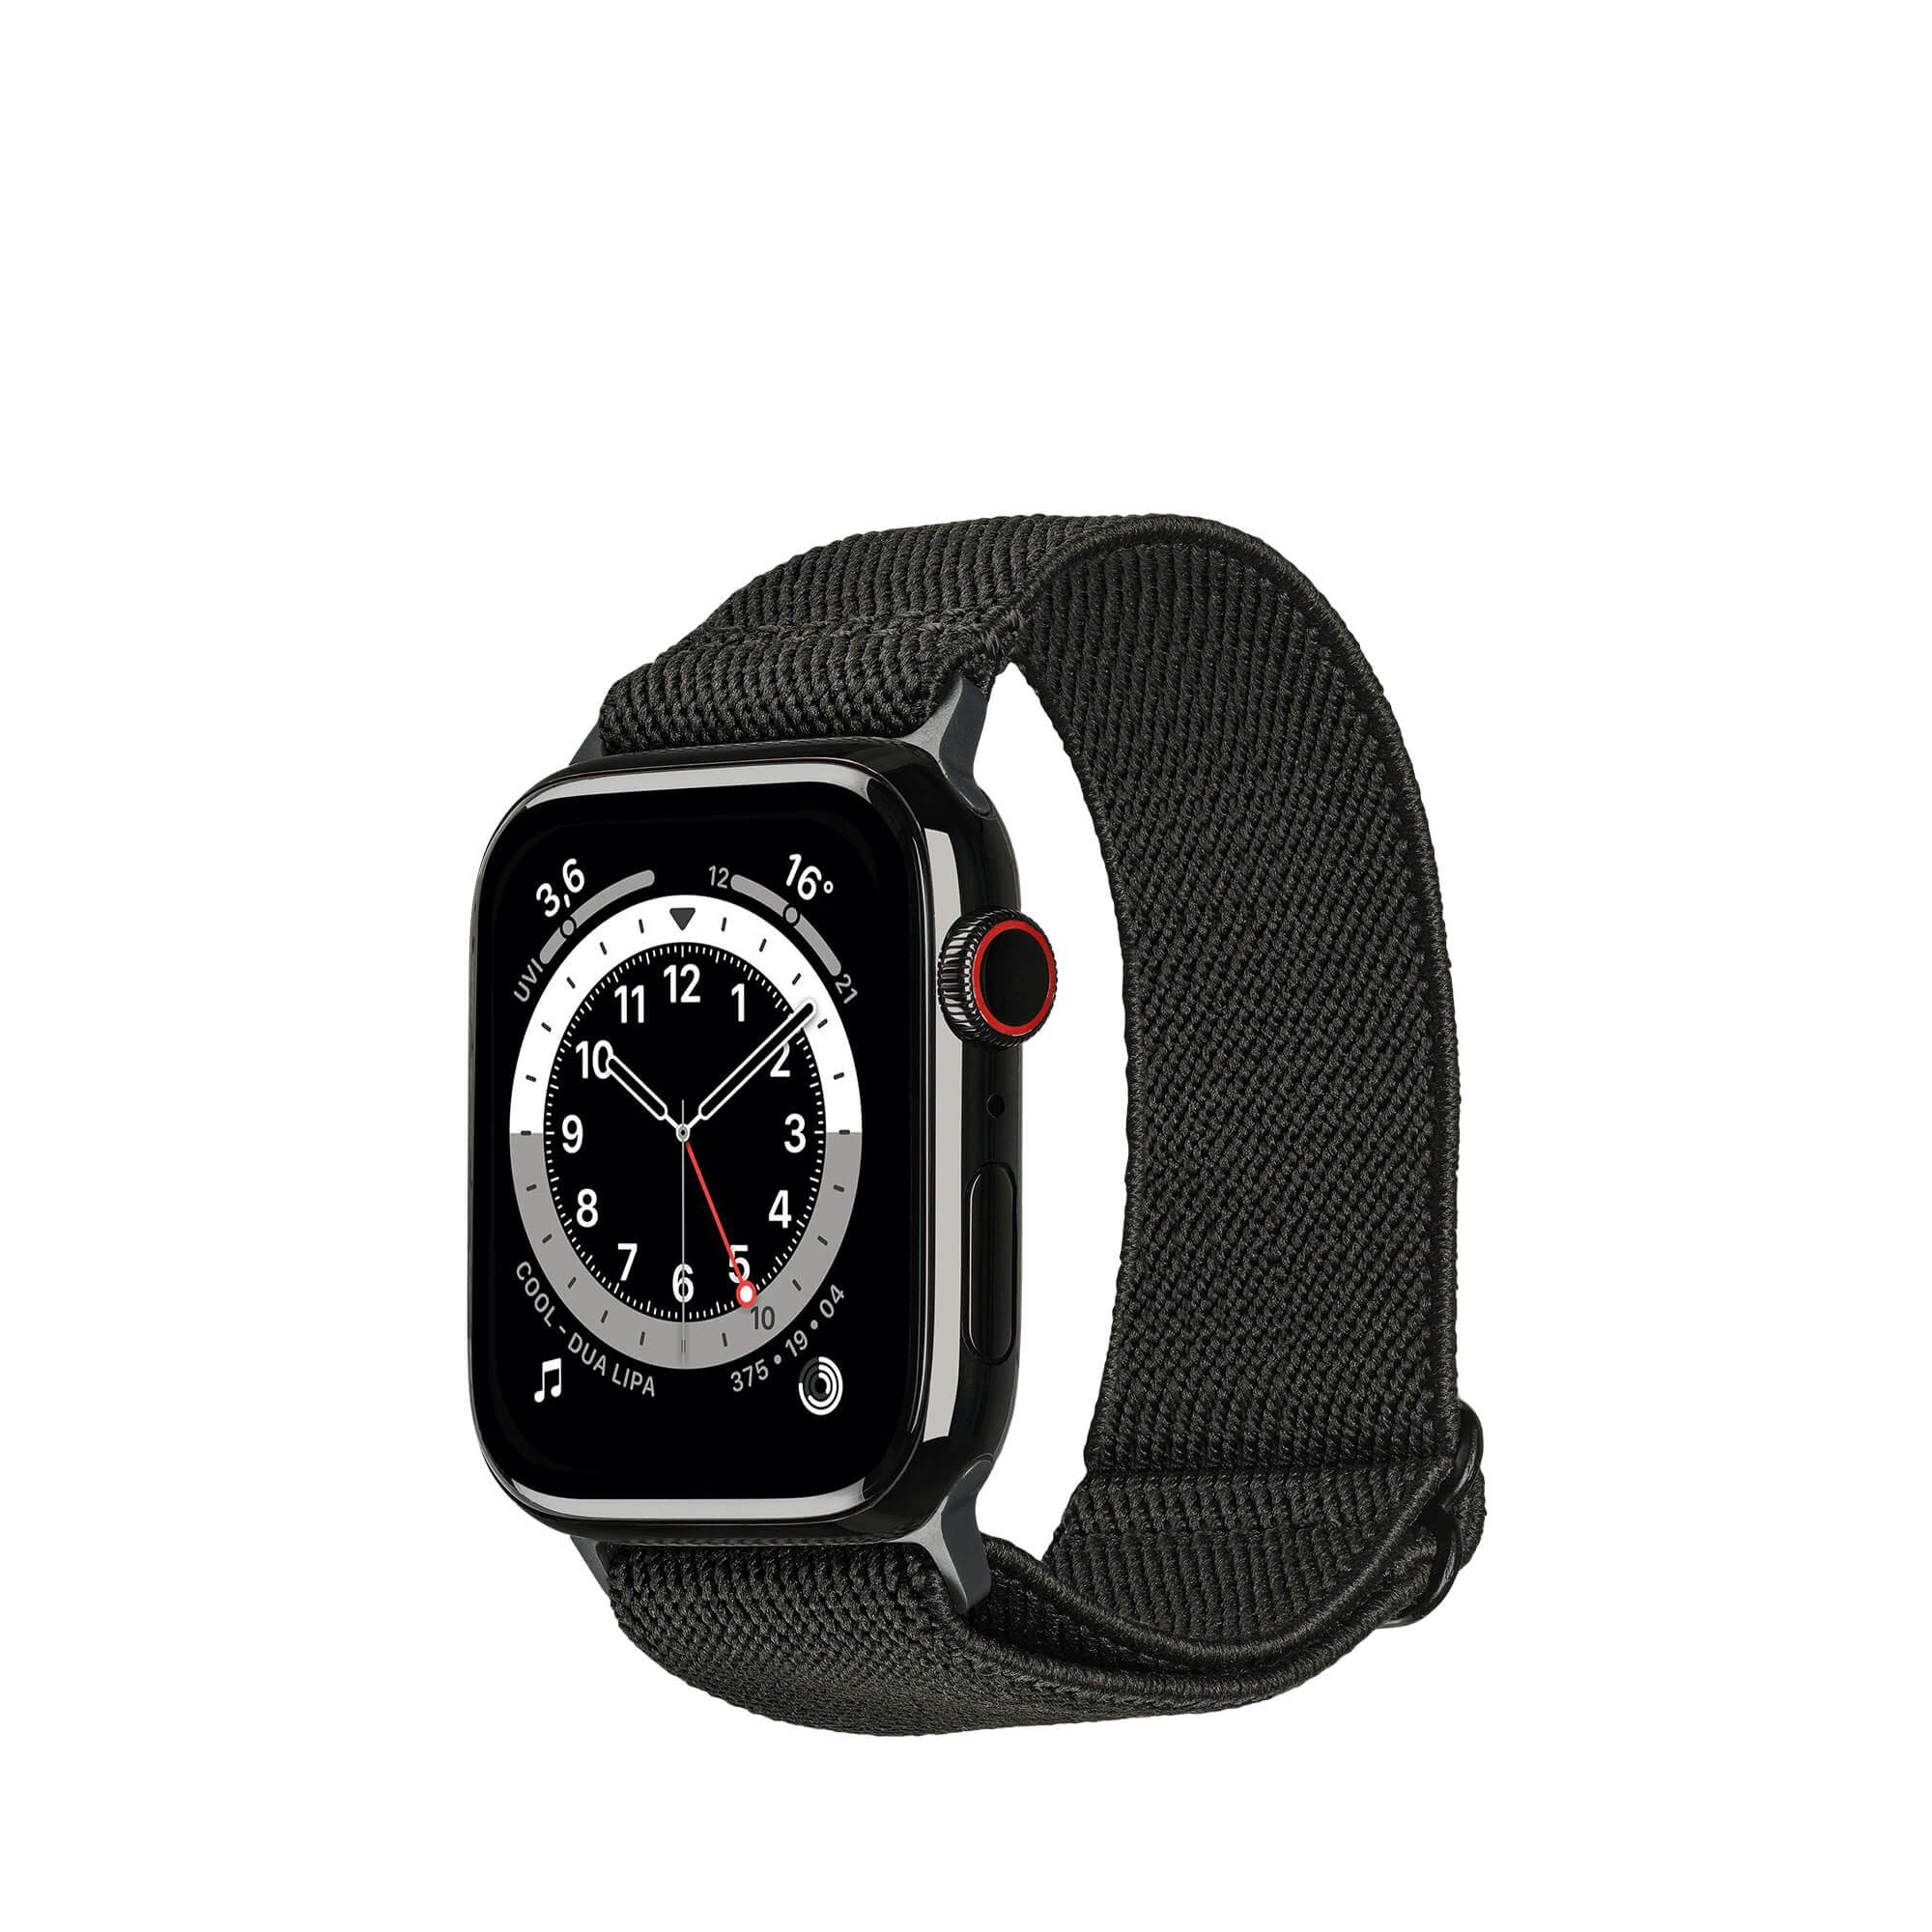 Textil Apple 9-7 Flex, & / (44mm), (49mm), SE mit Ultra 2 Adapter, Uhrenarmband 6-4 Space-Grau, (45mm), 3-1 WatchBand Watch Artwizz (42mm) Smartwatch-Armband